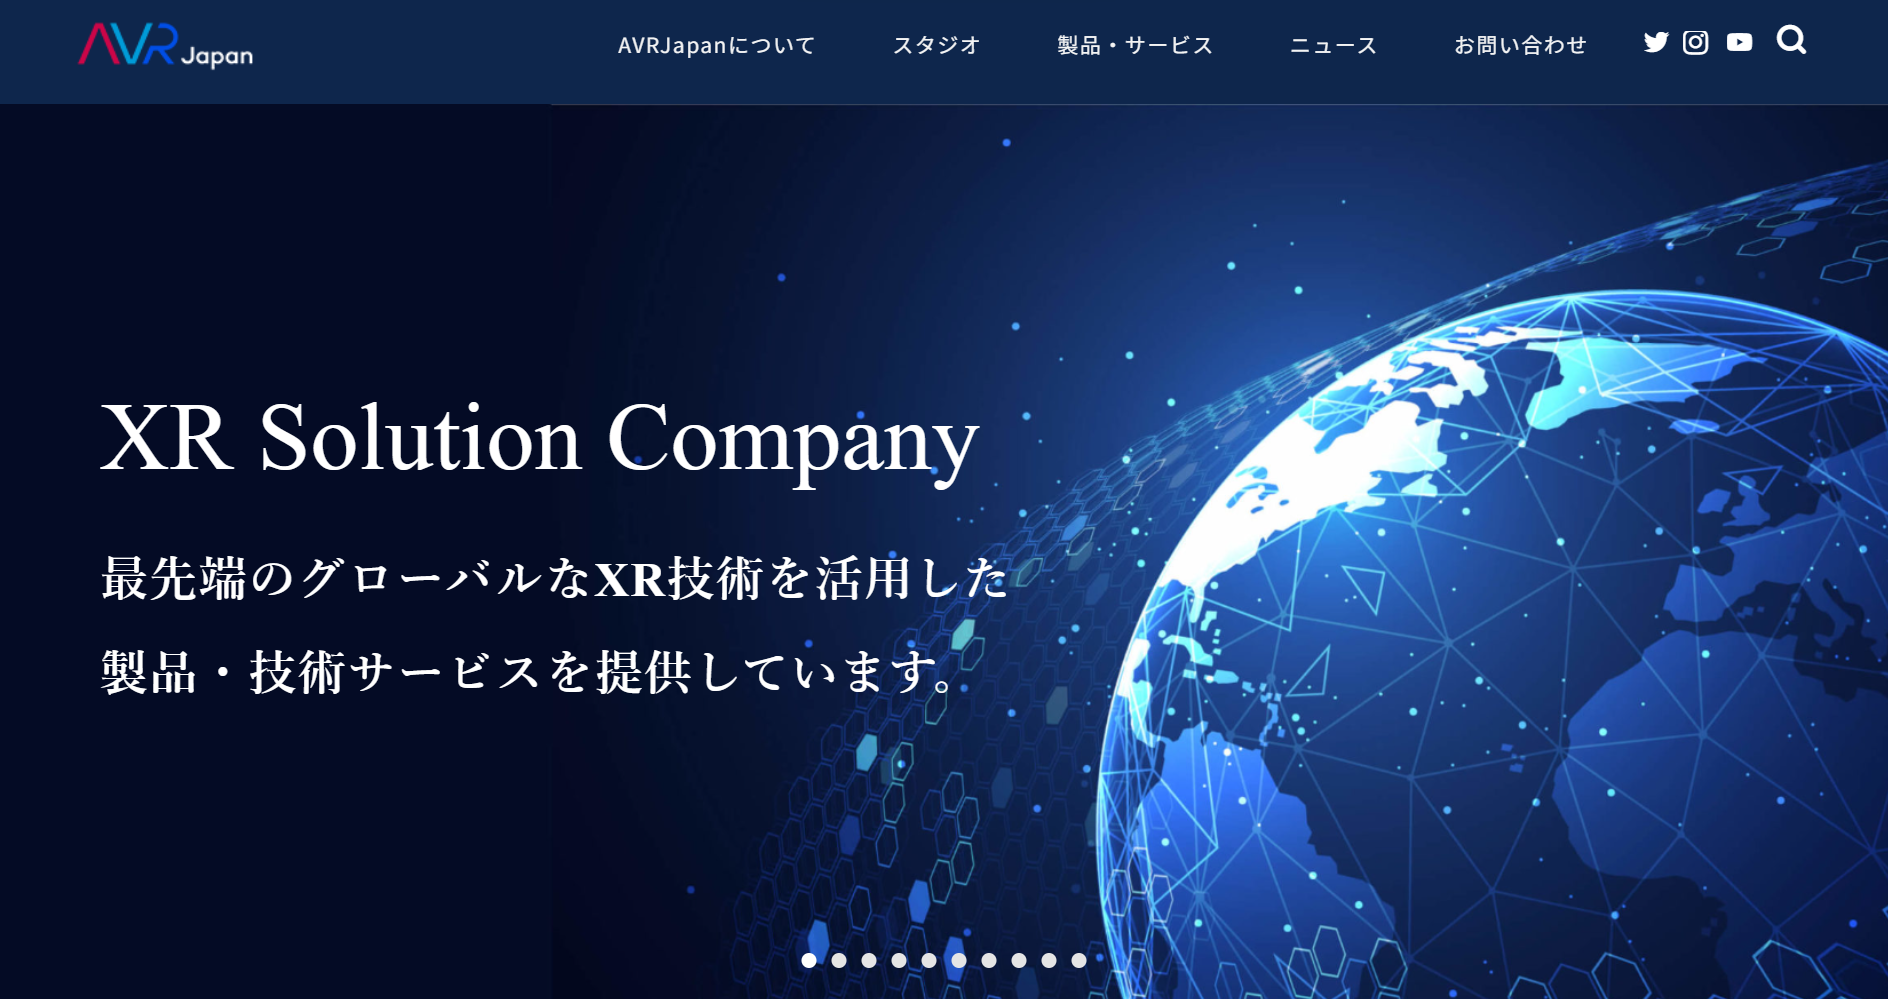 AVR Japan株式会社のAVR Japan株式会社サービス